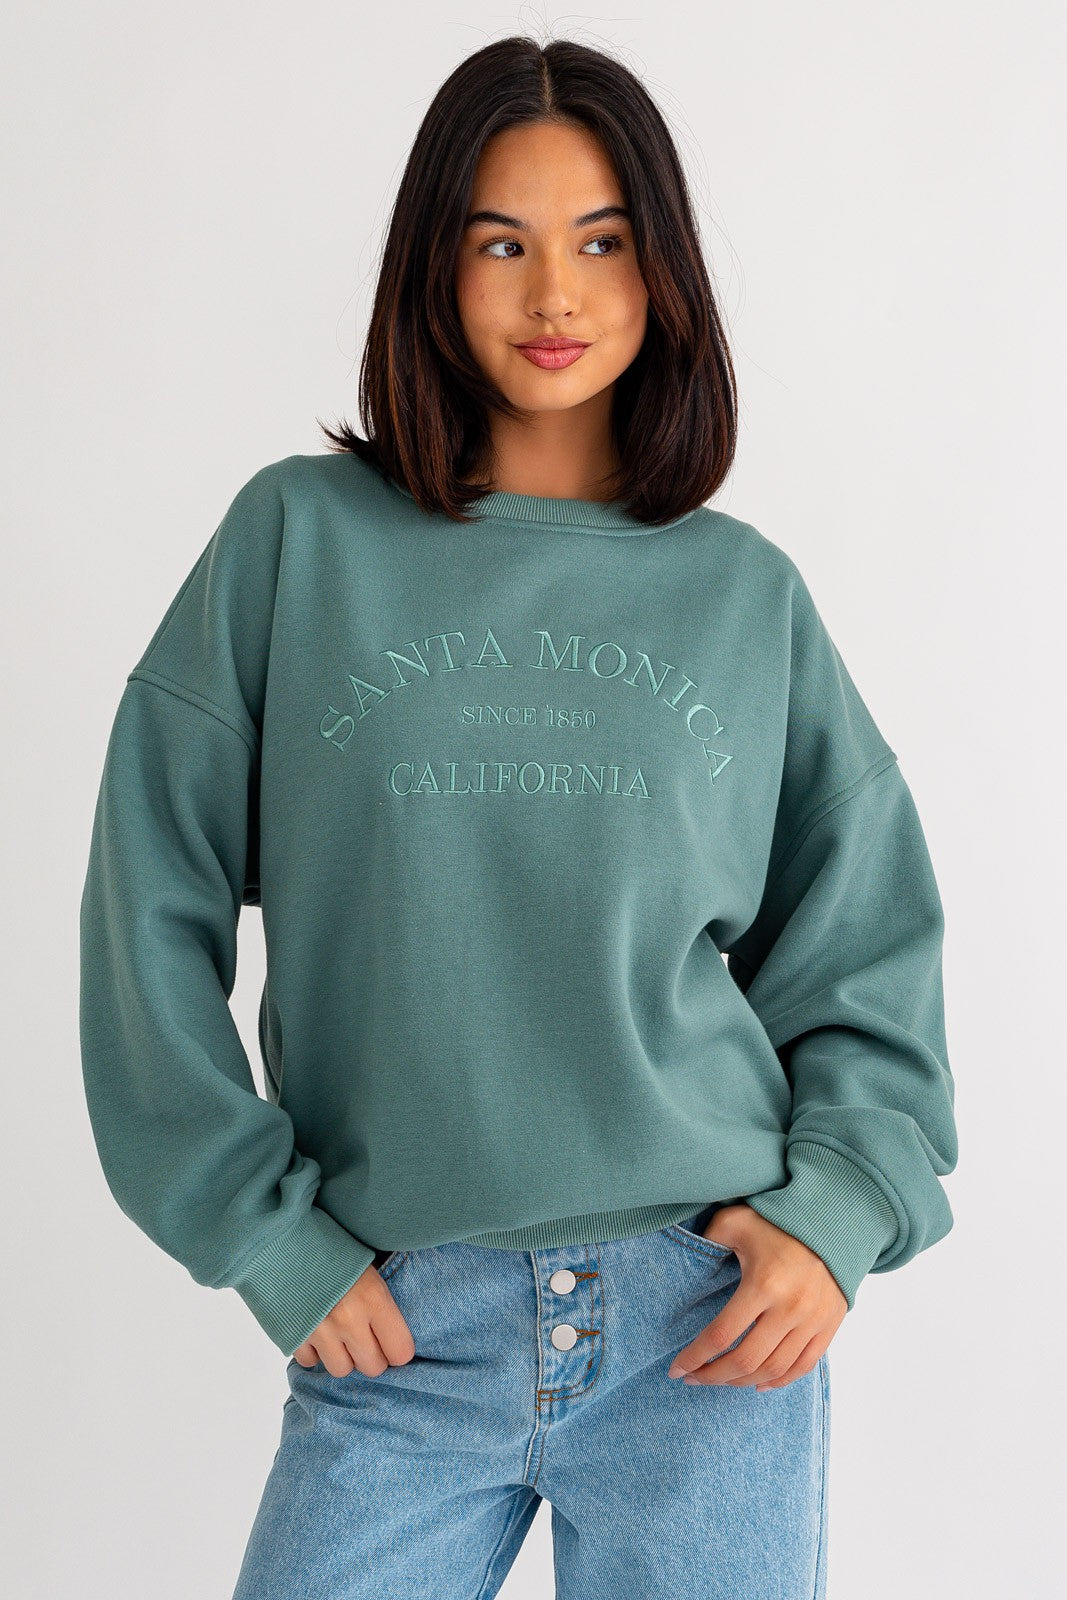 Santa Monica Sweatshirt - Proper